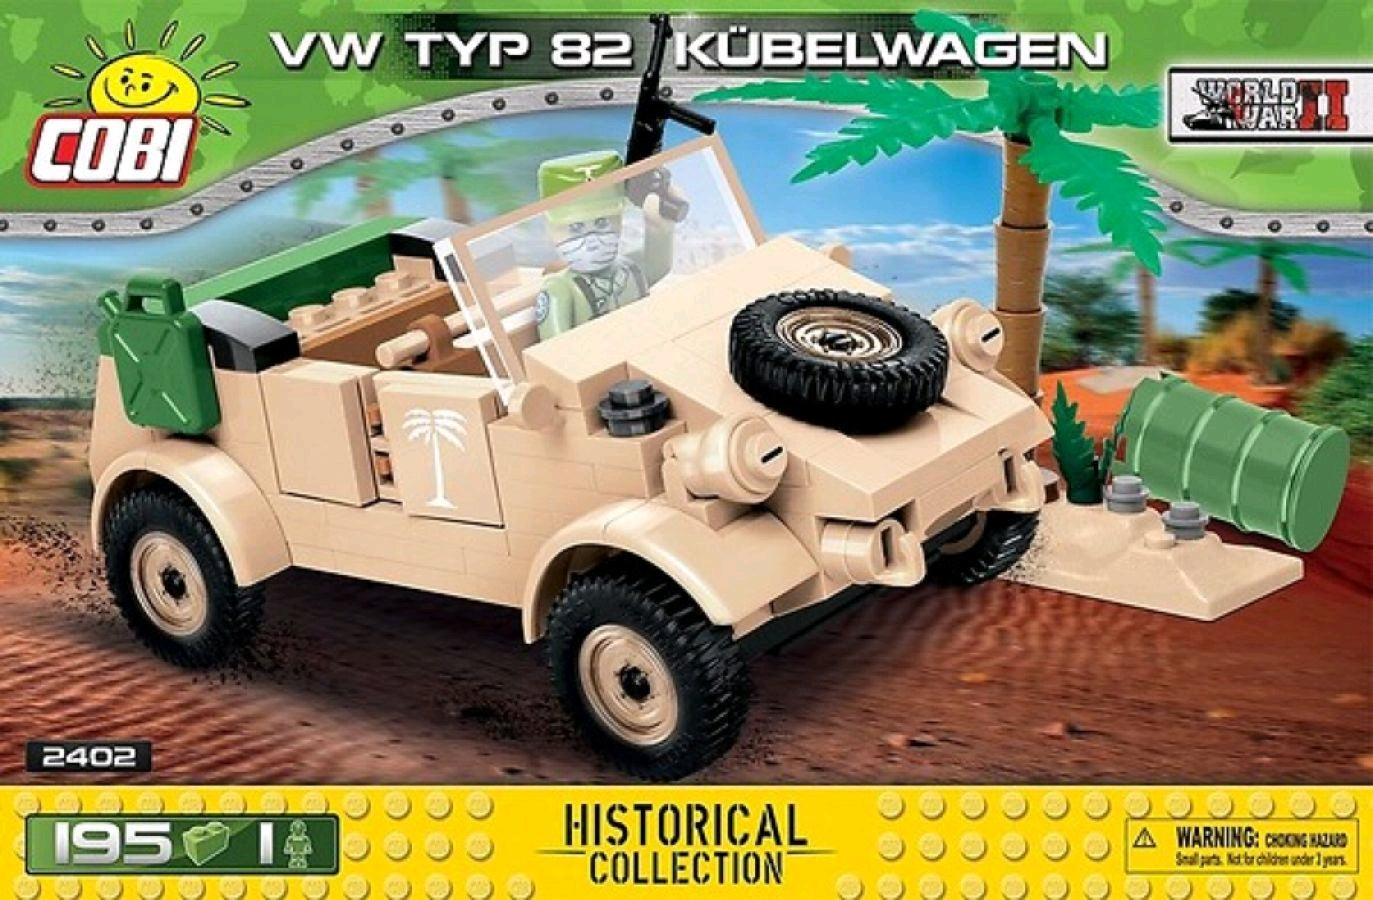 World War II - VW Typ 82 Kubelwagen 195 pieces